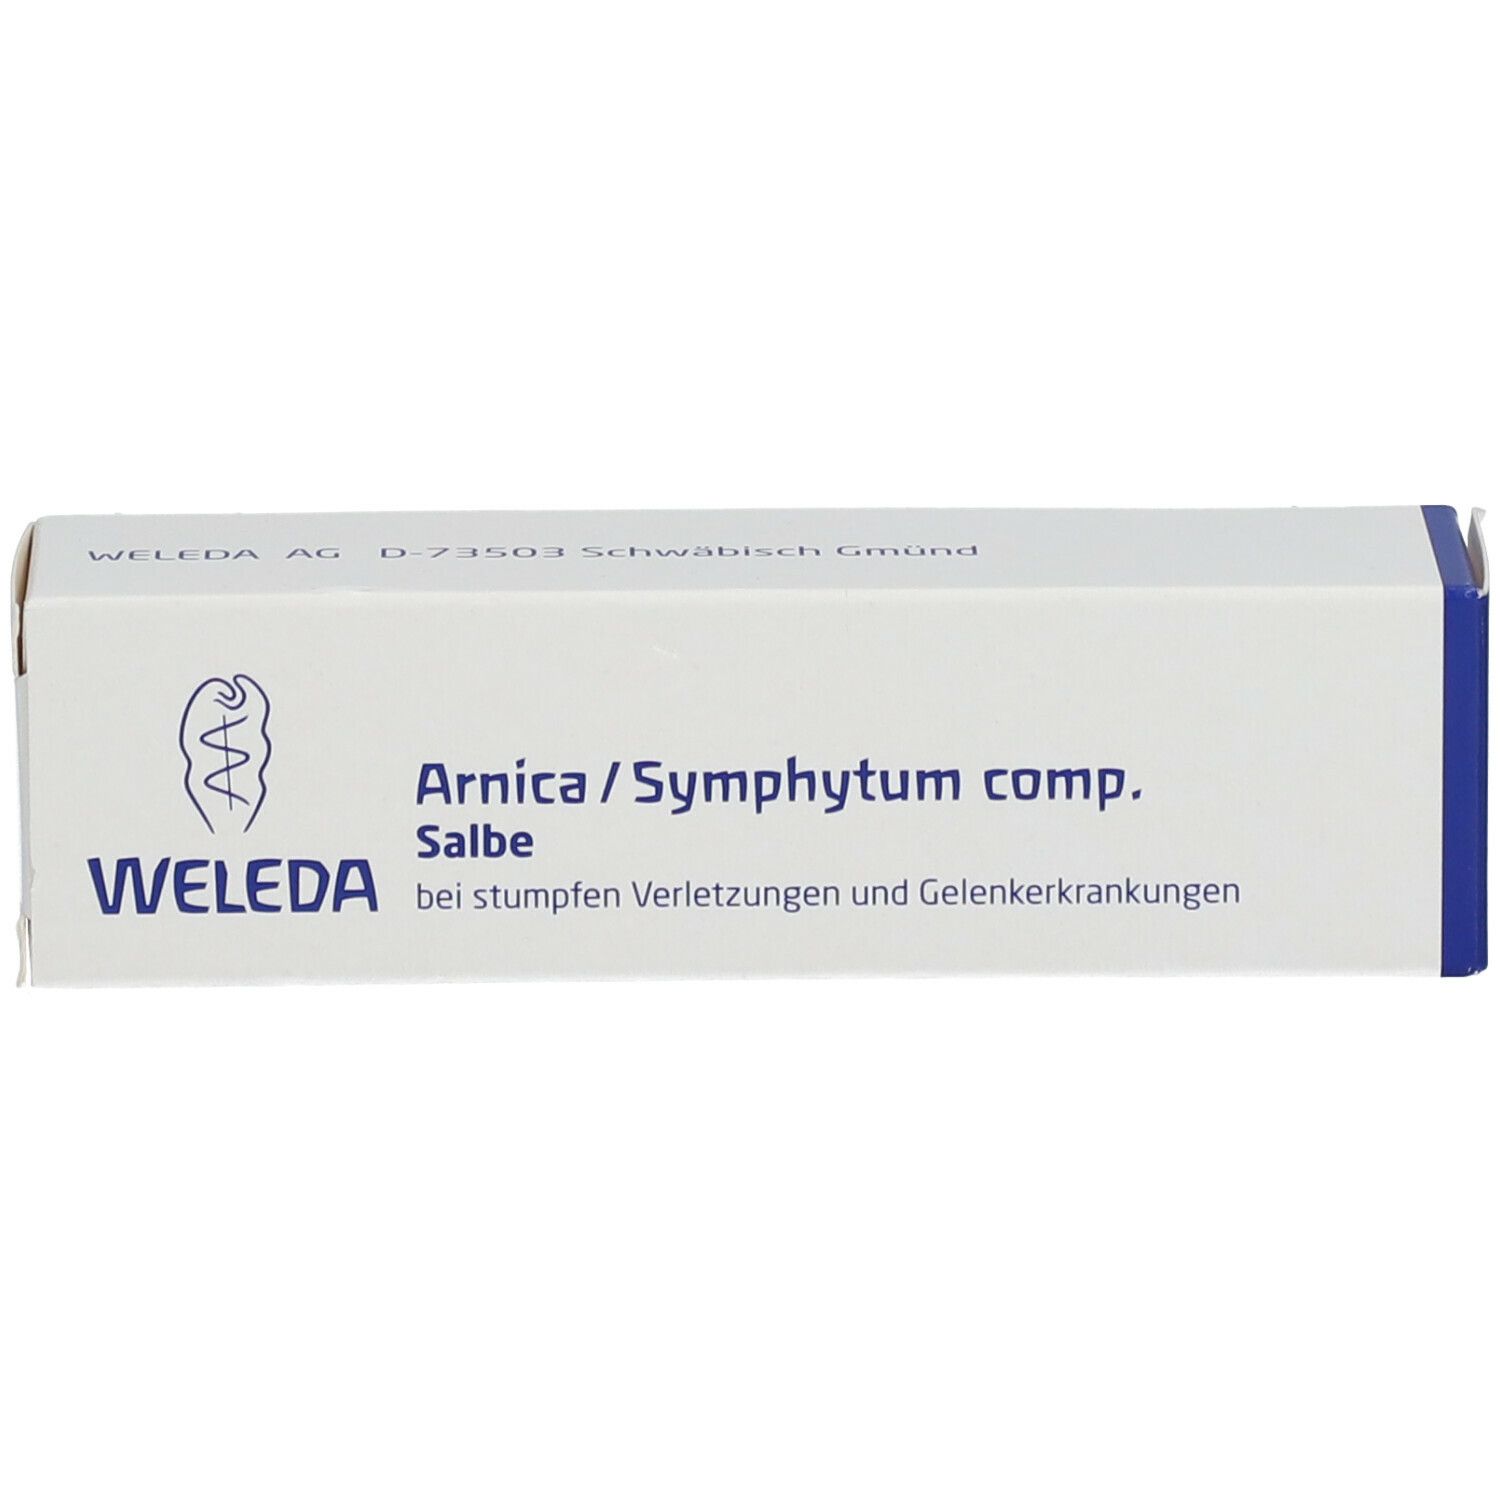 Arnica / Symphytum comp. Salbe